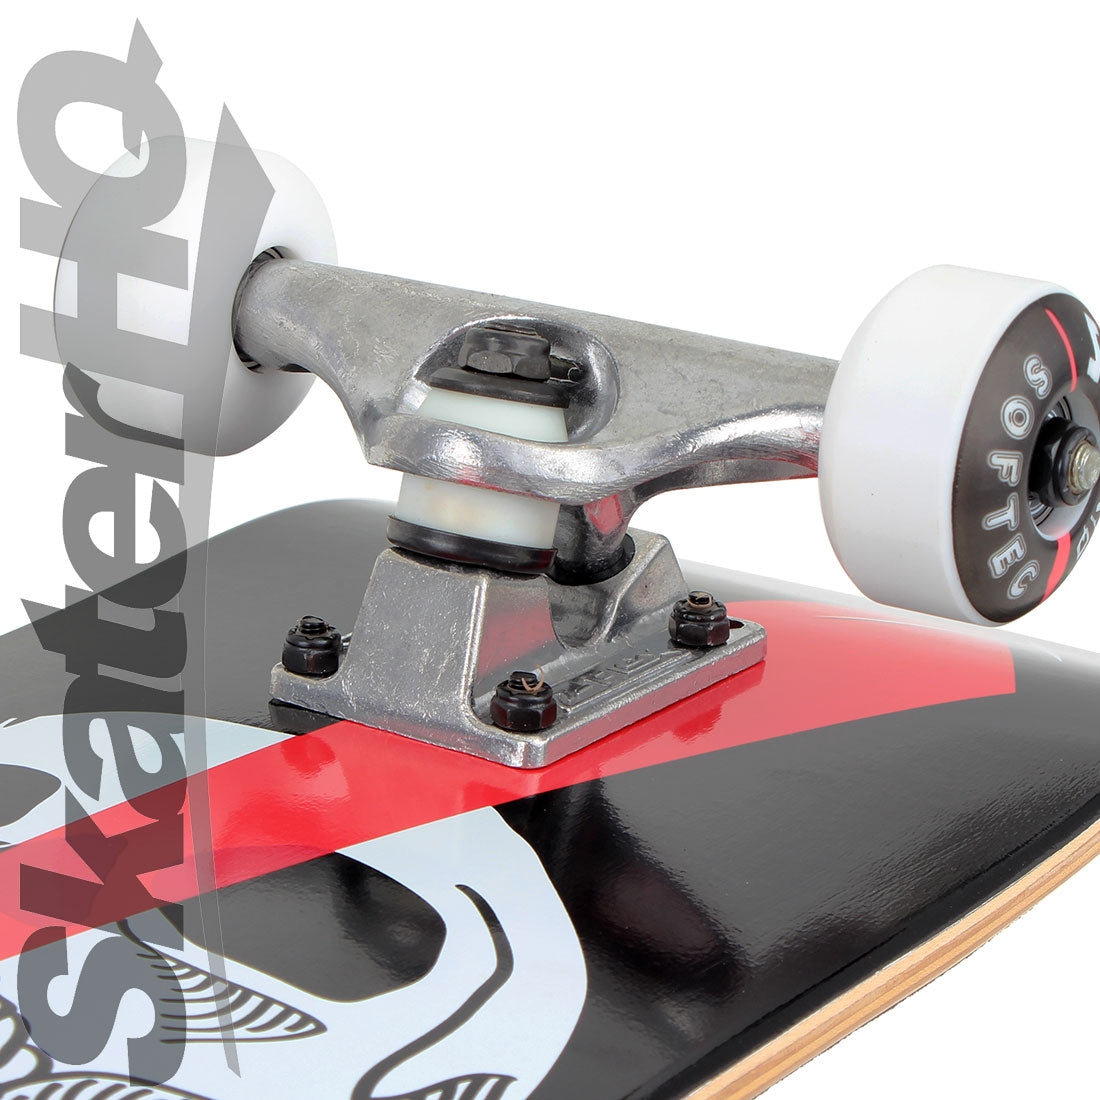 Skater HQ Skull and Swoosh 7.75 Complete Skateboard Completes Modern Street